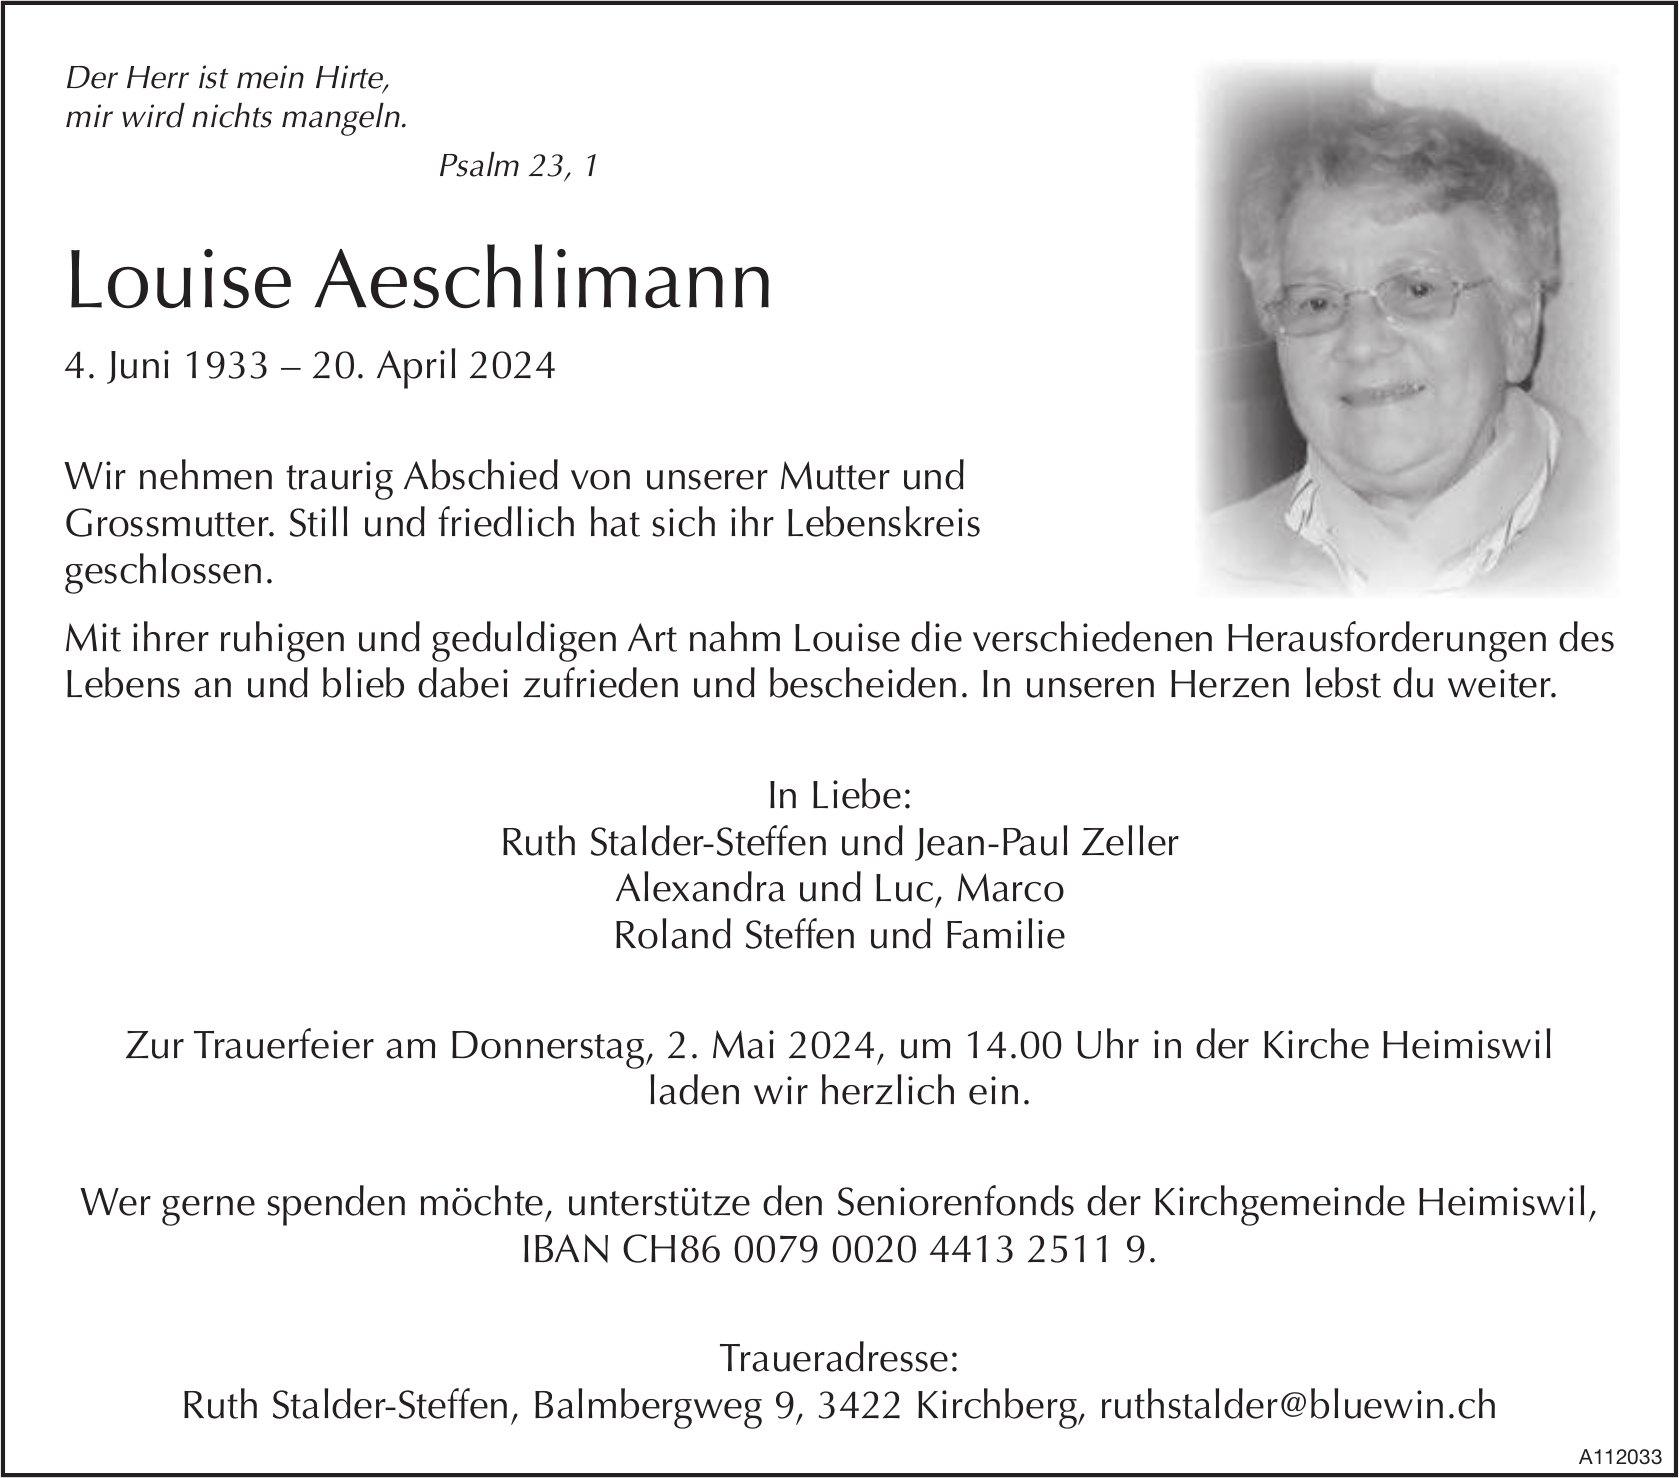 Louise Aeschlimann, April 2024 / TA